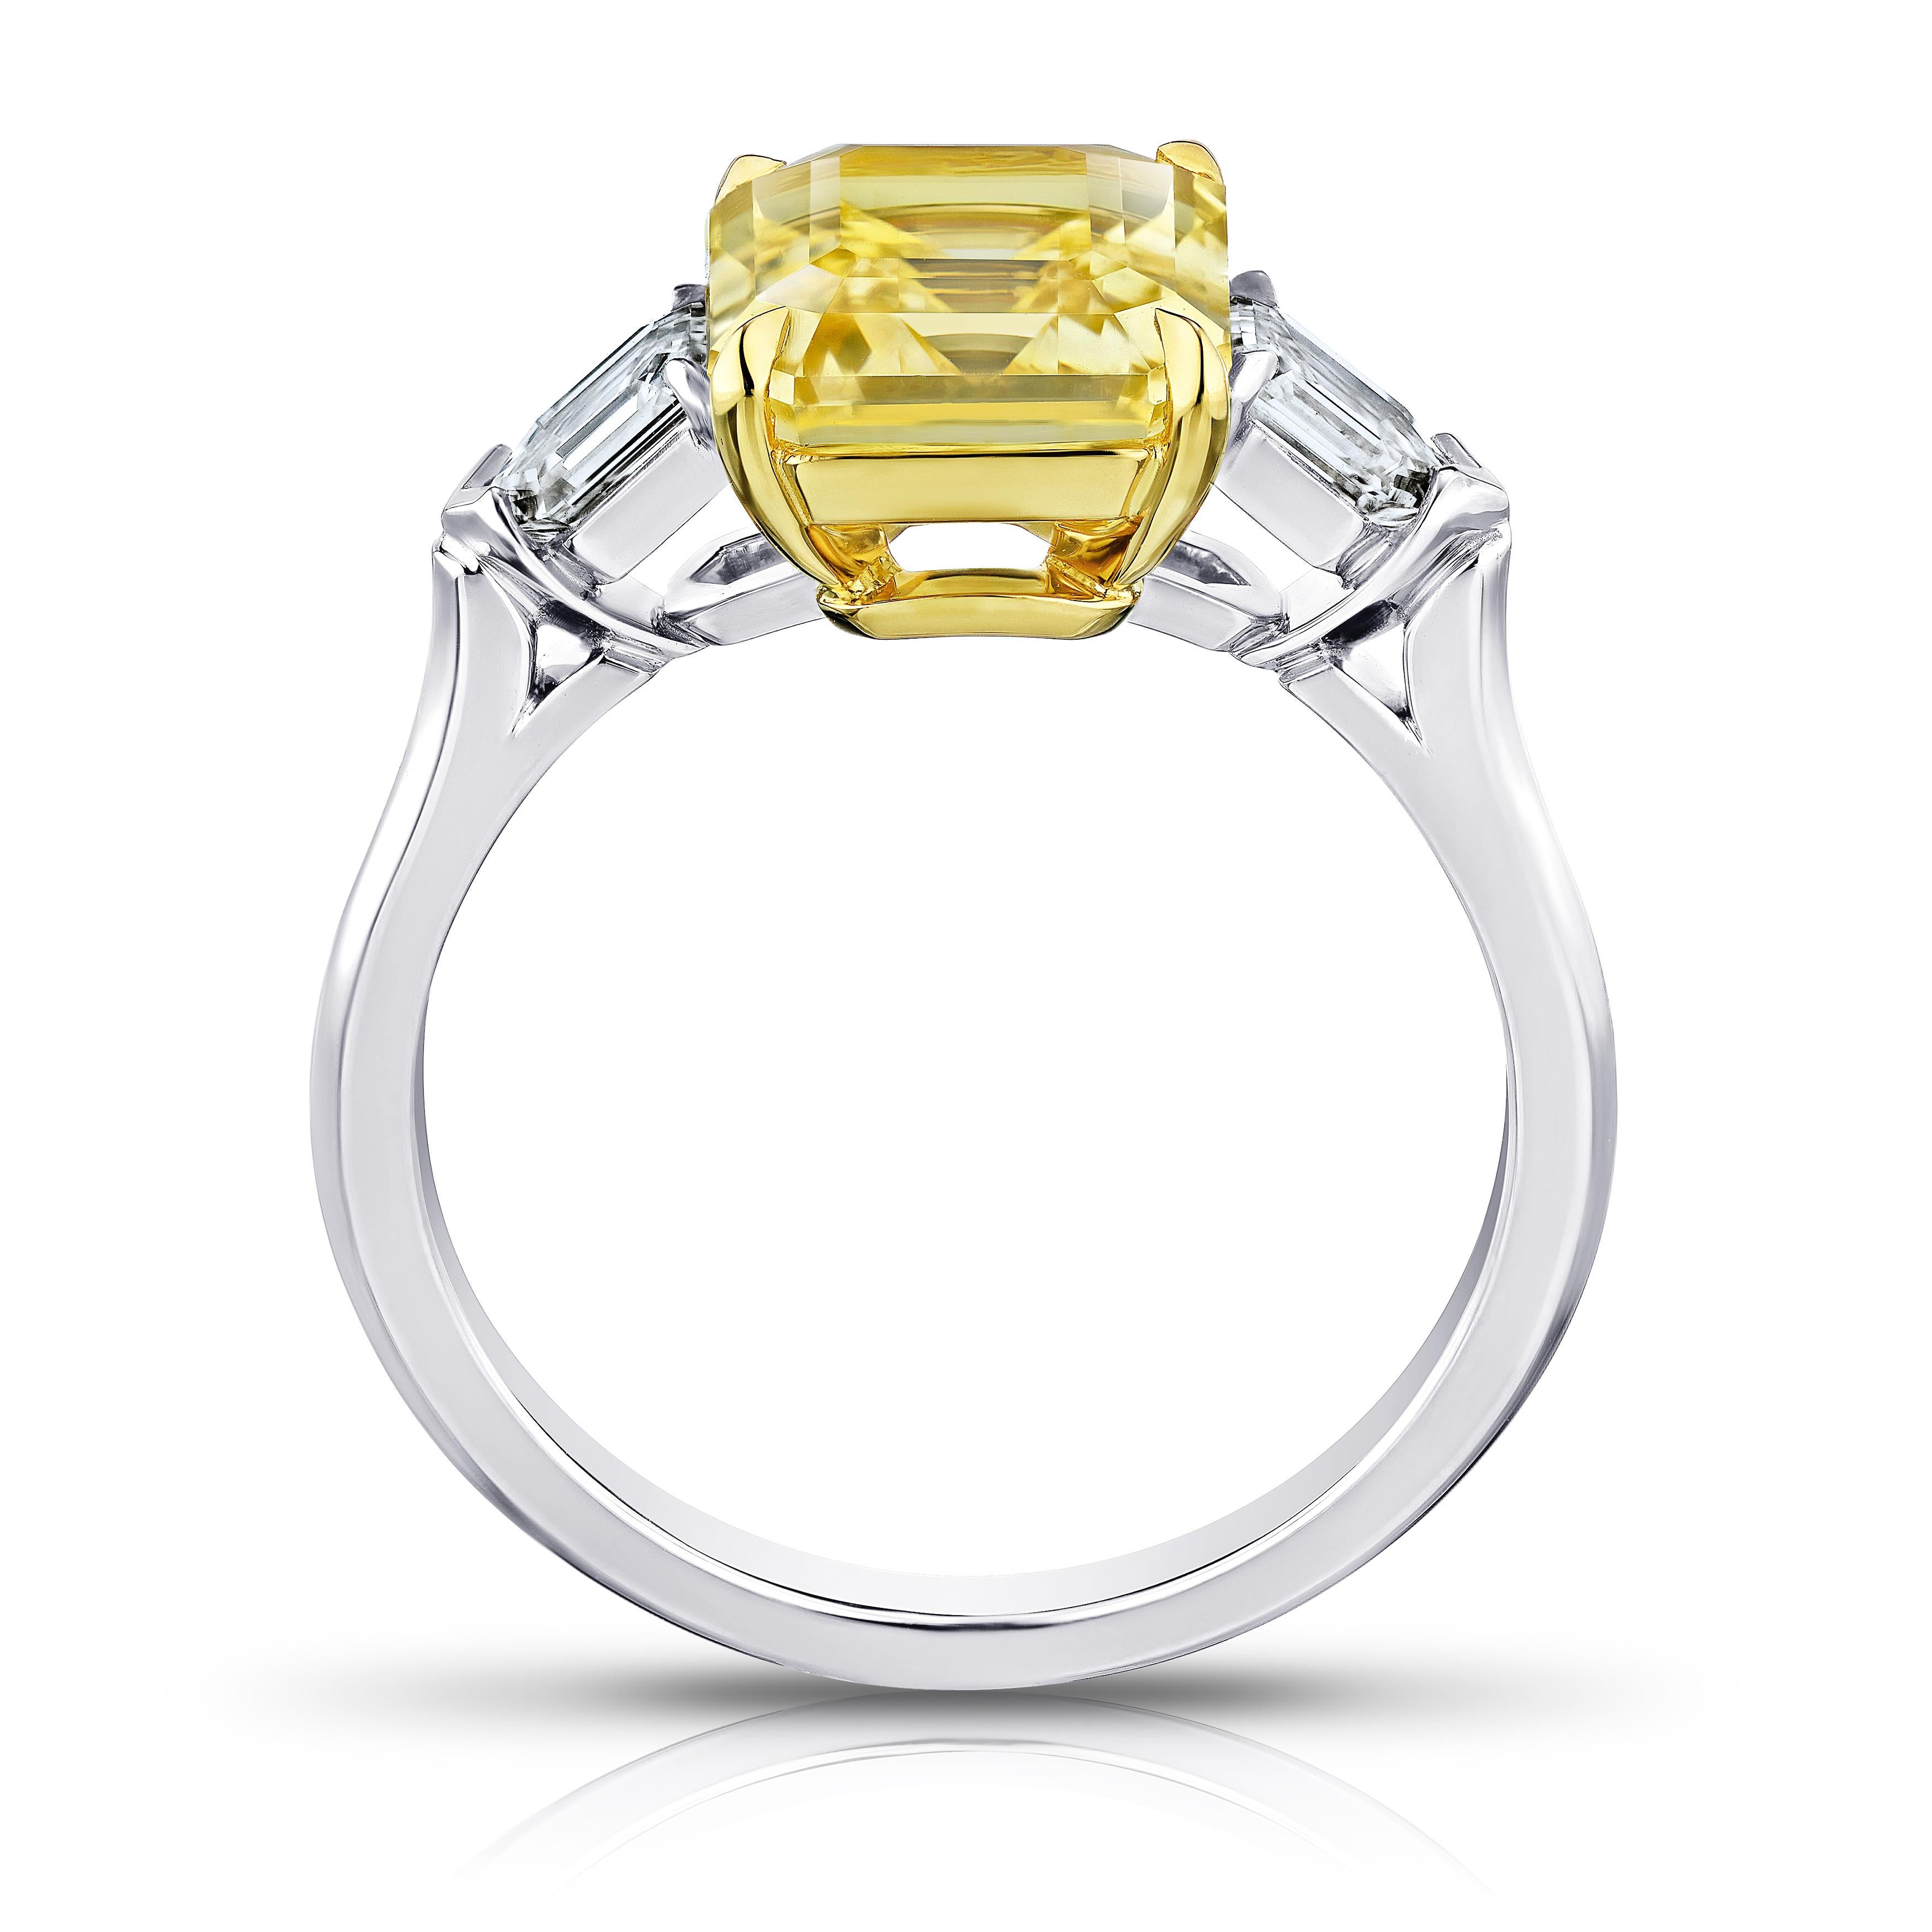 Contemporary 3.80 Carat Emerald Cut Yellow Sapphire and Diamond Ring